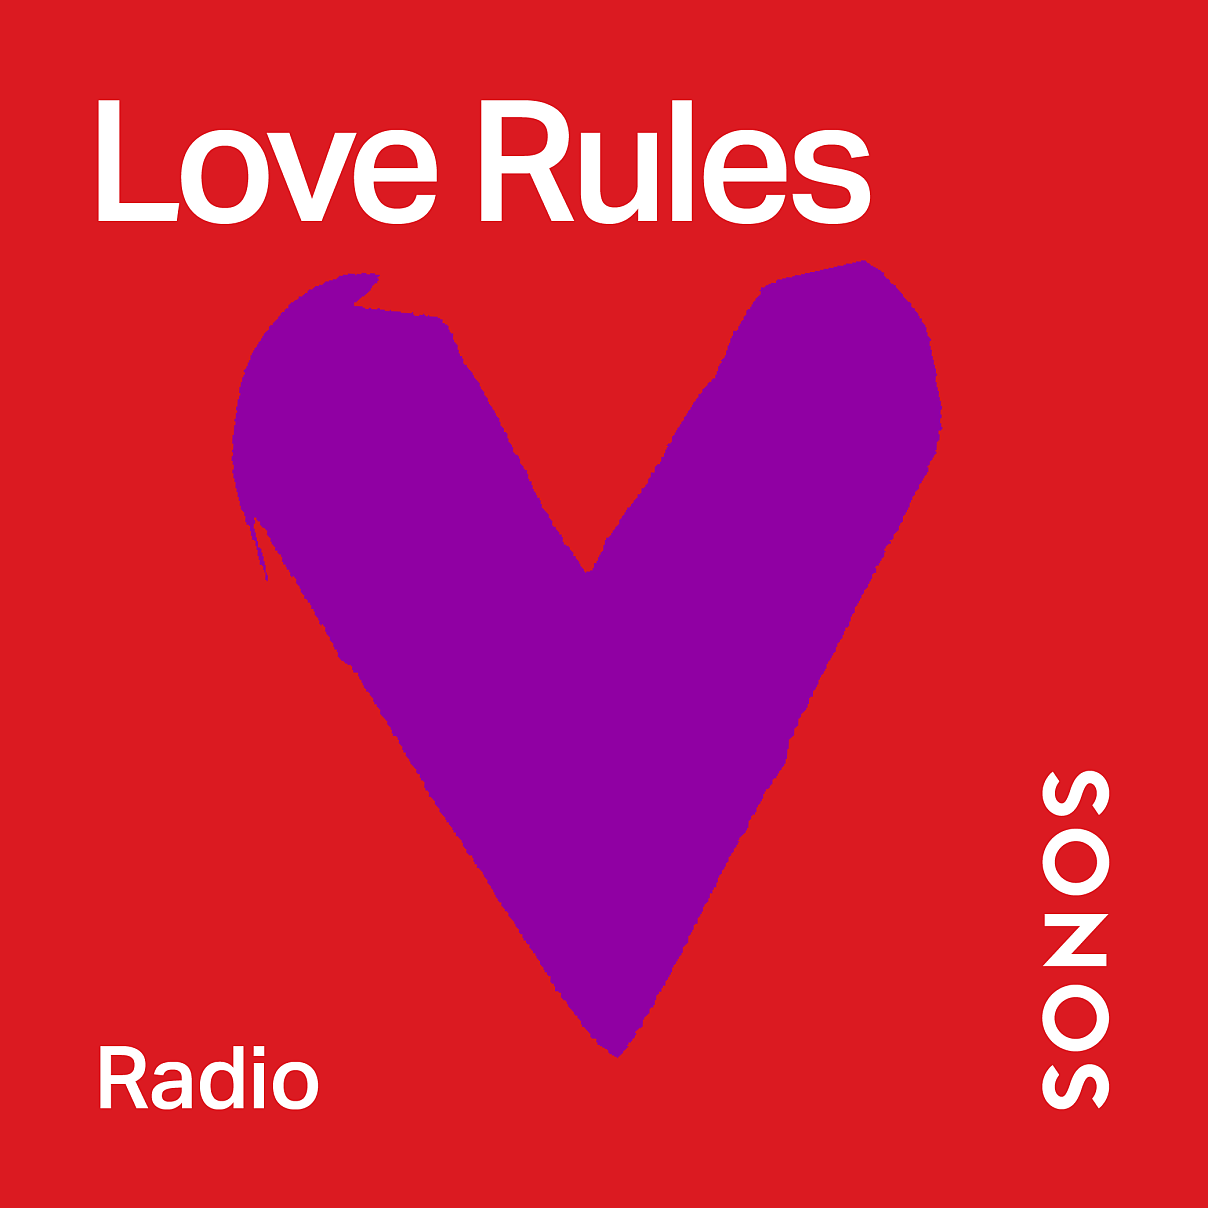 Sonos Radio Station: Love Rules